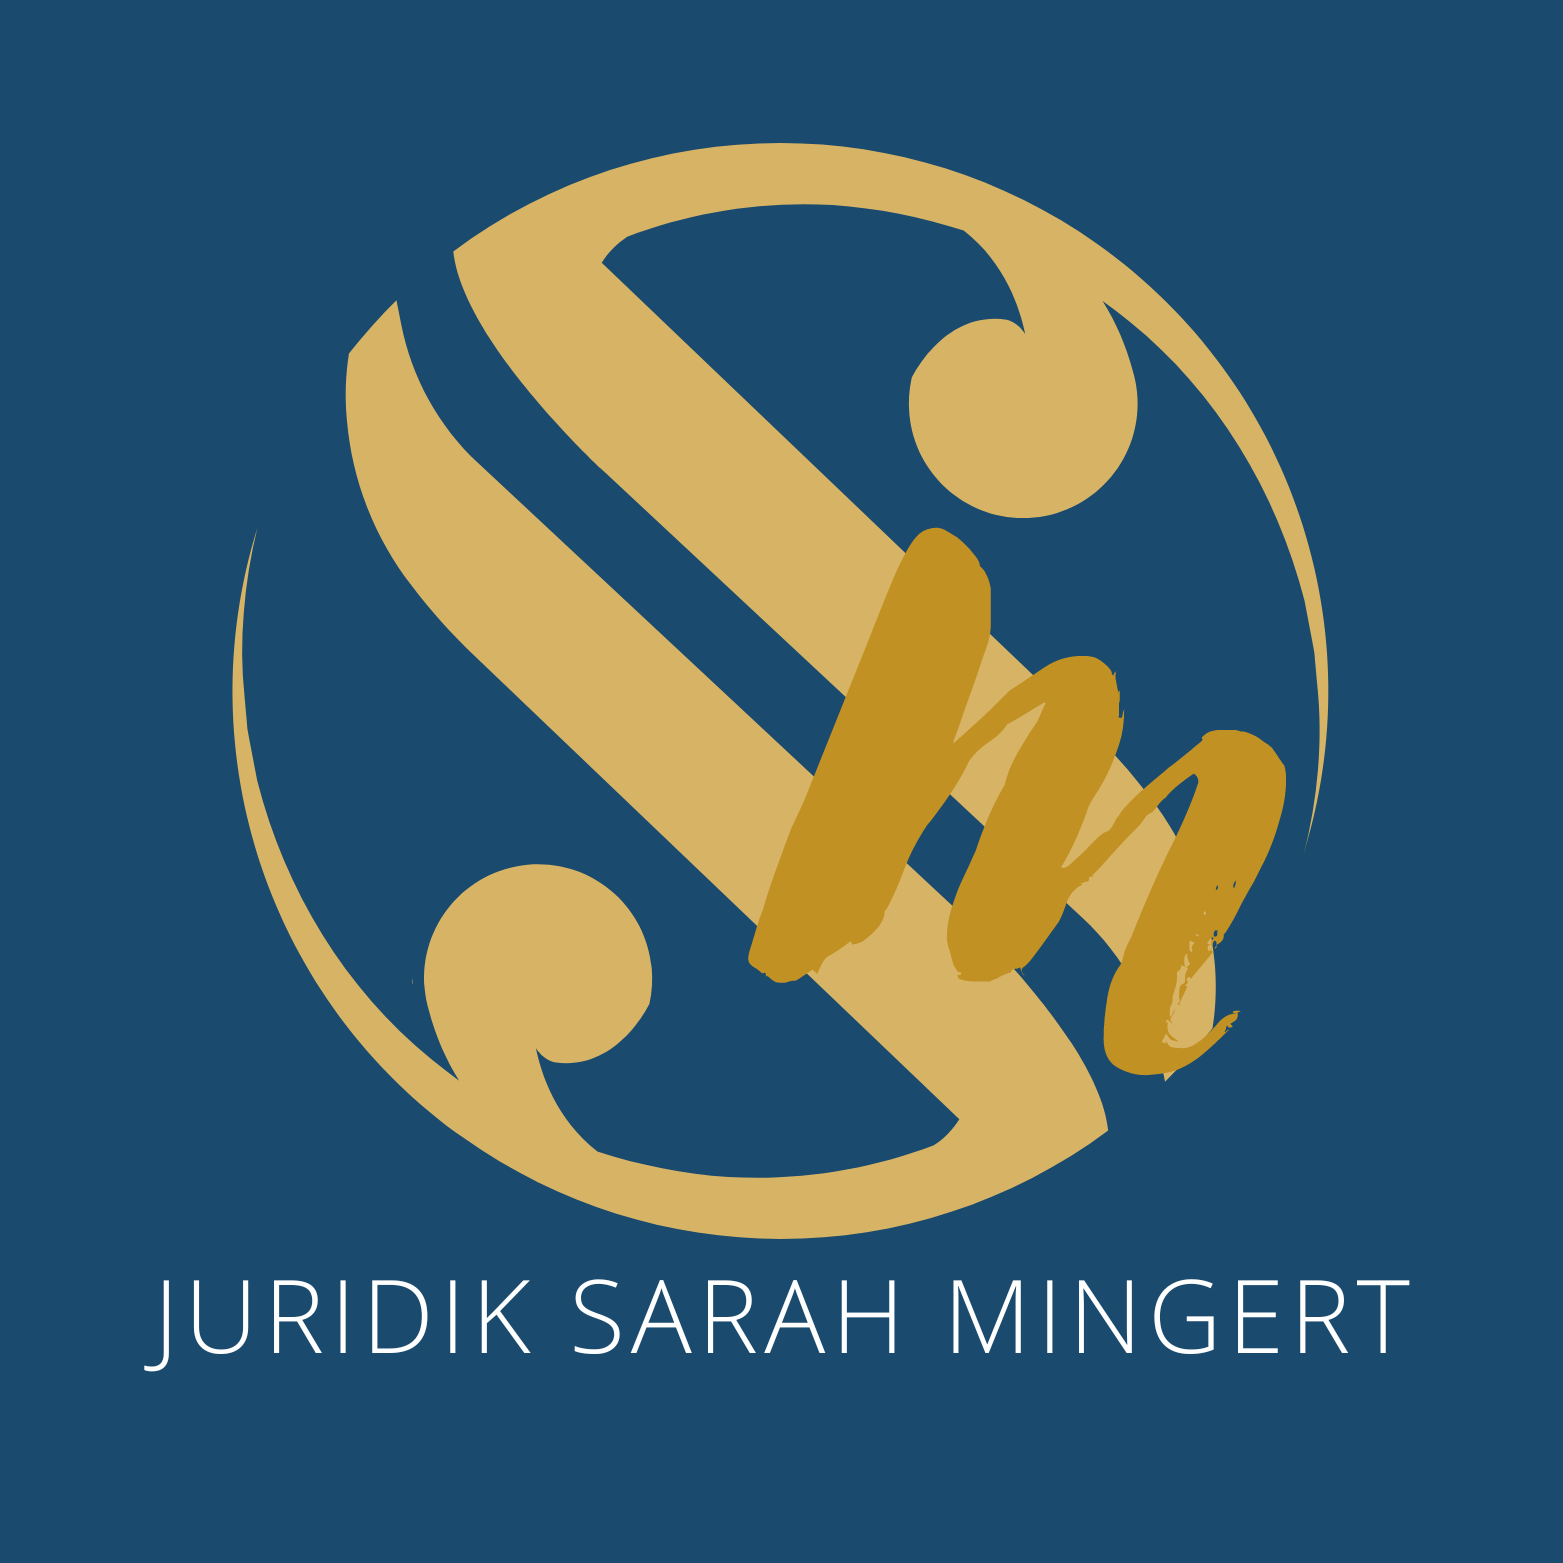 Juridik Sarah Mingert